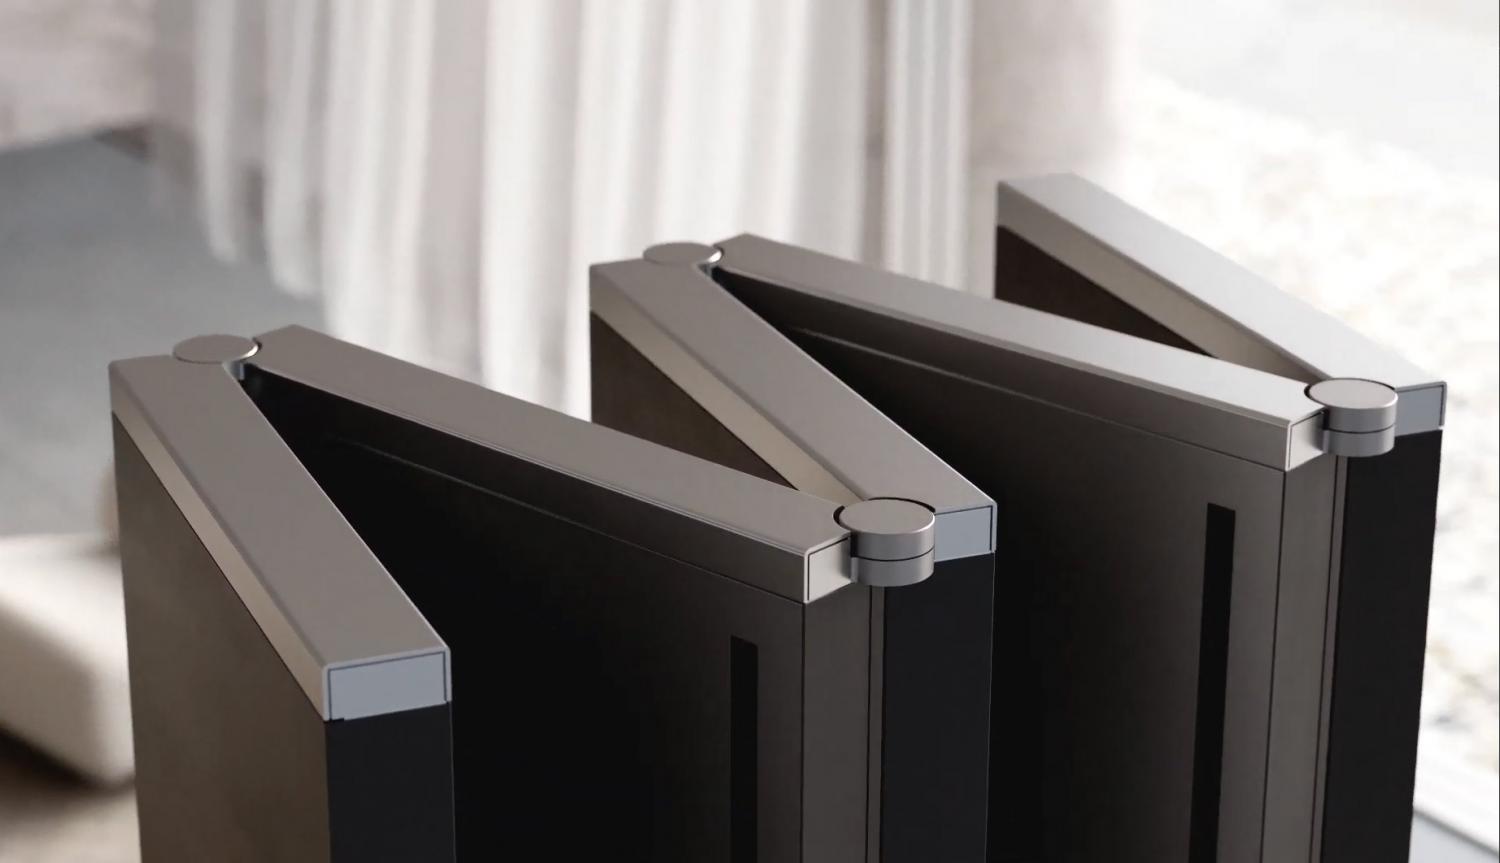 C SEED Giant Folding Television - Luxury fold-away TV